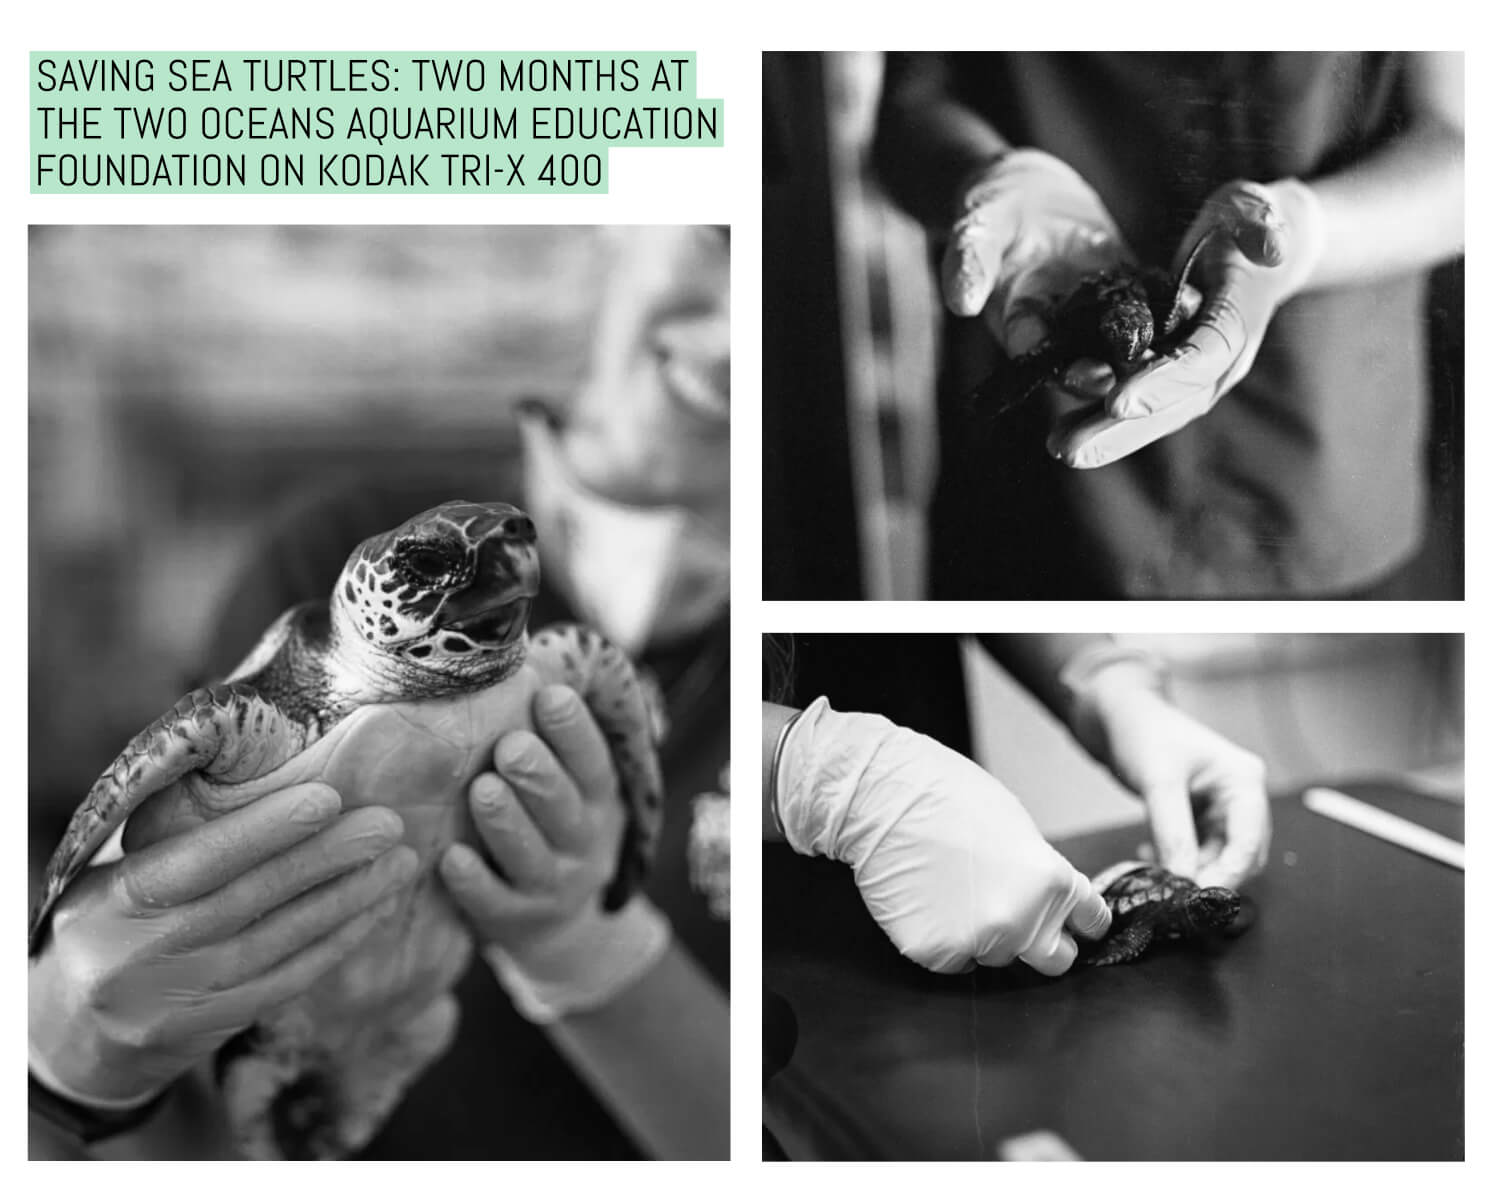 Saving sea turtles: Two months at the Two Oceans Aquarium Education Foundation on Kodak Tri-X 400